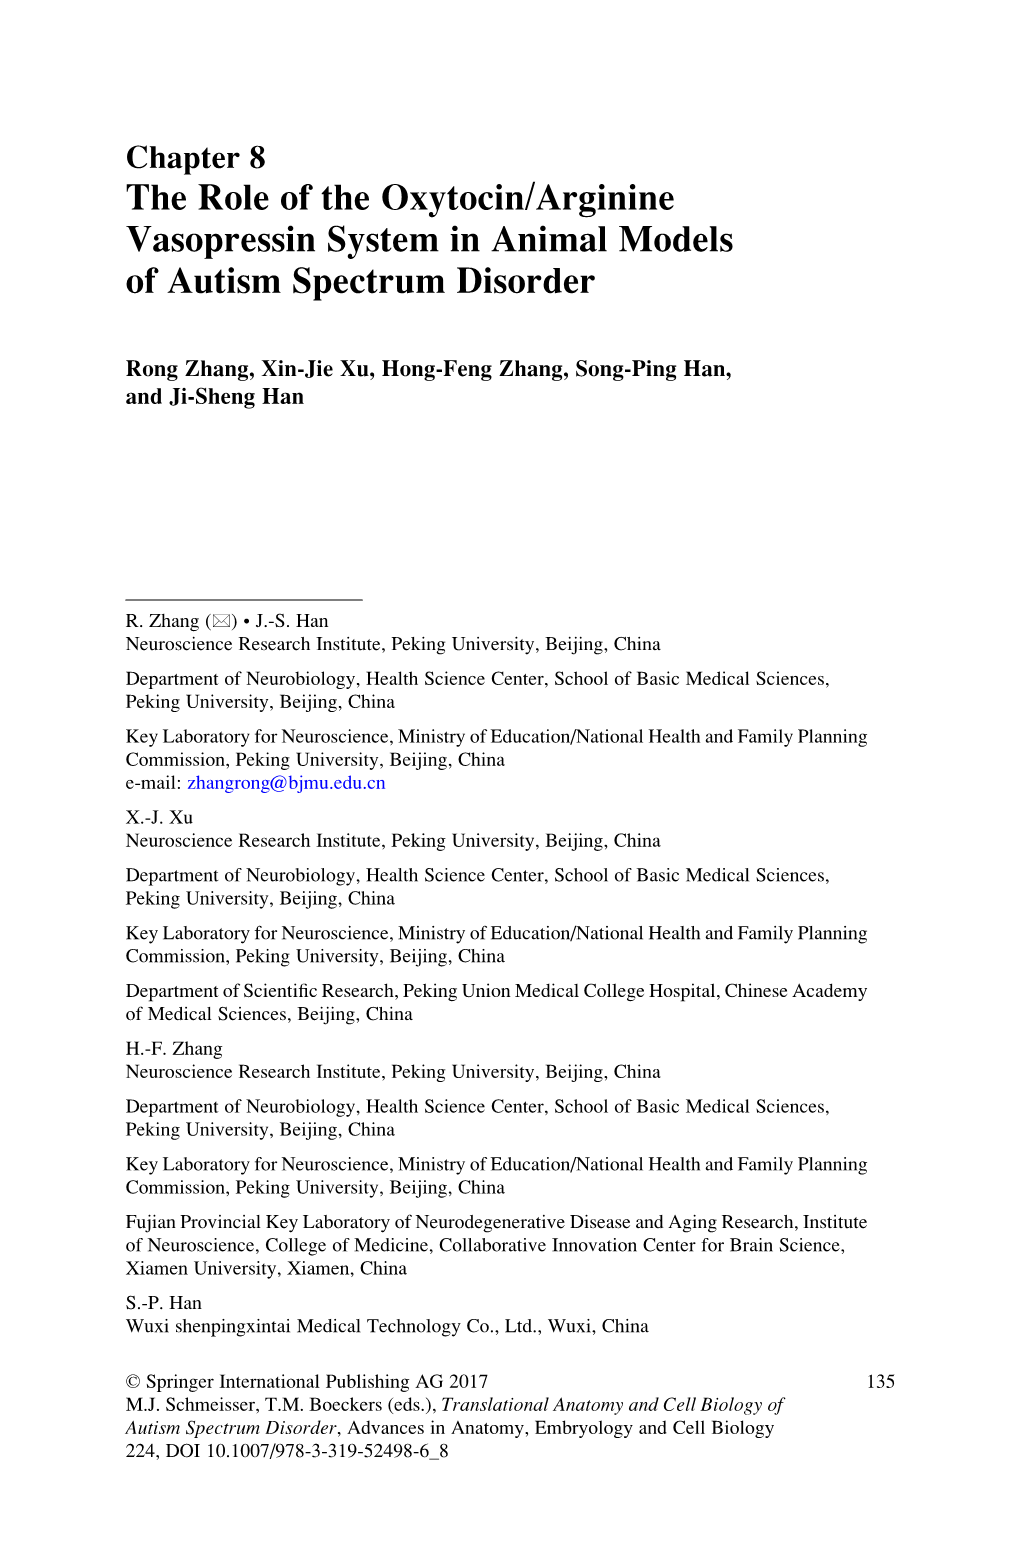 The Role of the Oxytocin/Arginine Vasopressin System in Animal Models of Autism Spectrum Disorder